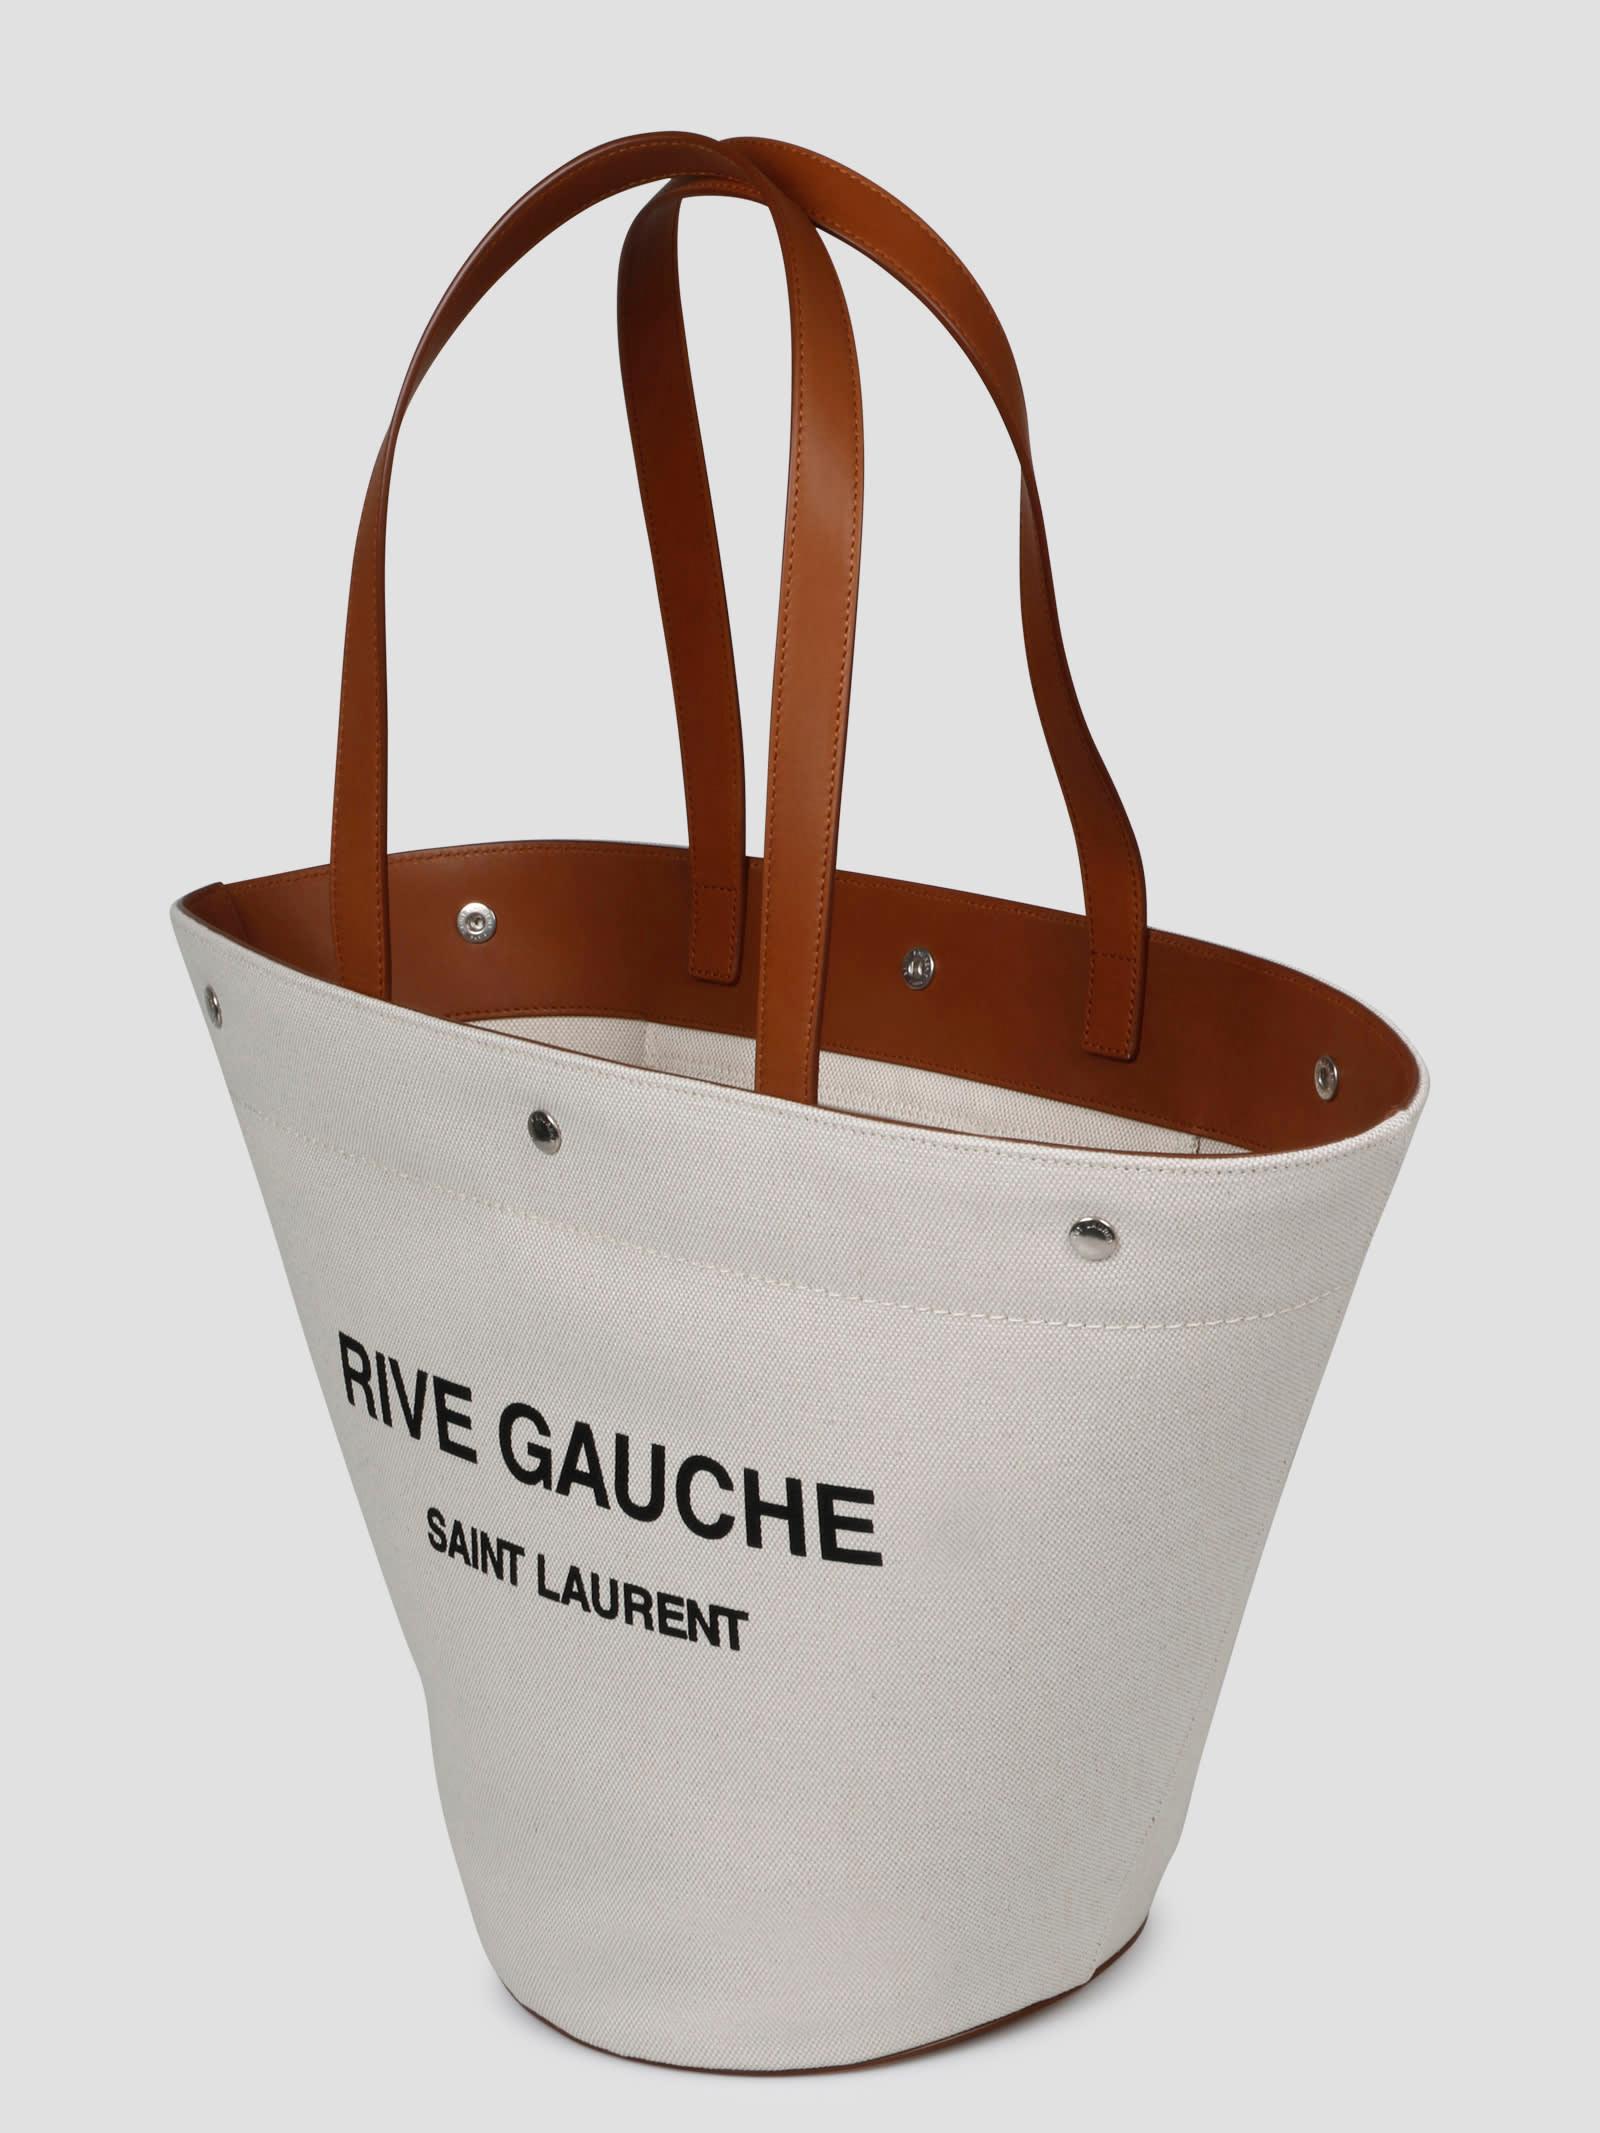 Saint Laurent Rive Gauche Tote Bag - Neutrals